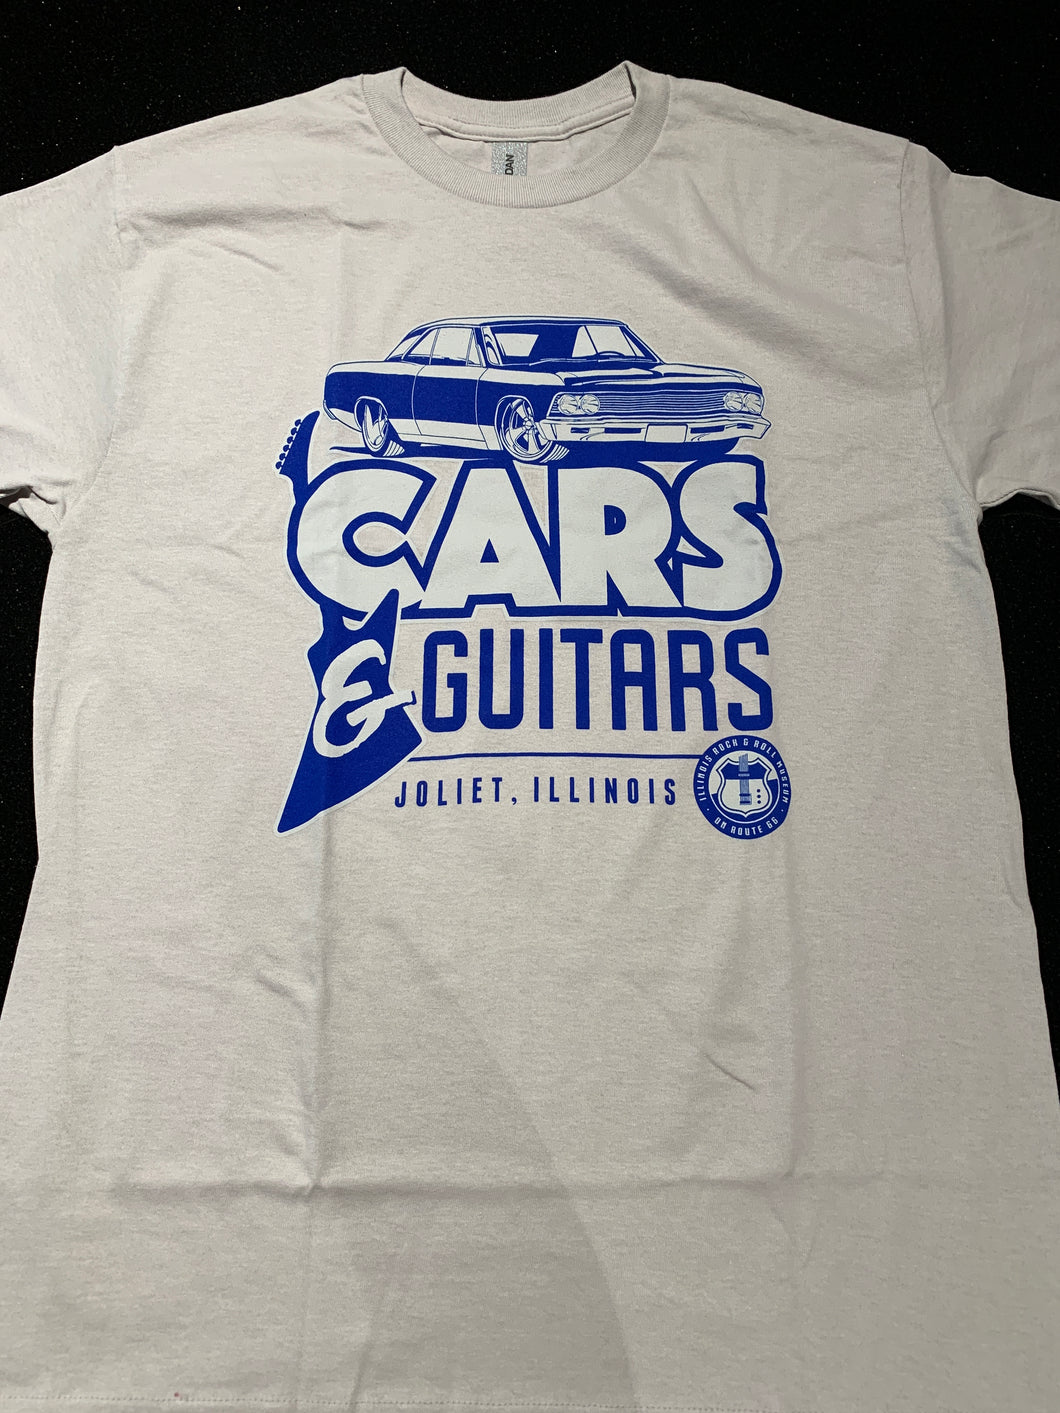 Cars & Guitar T-Shirt